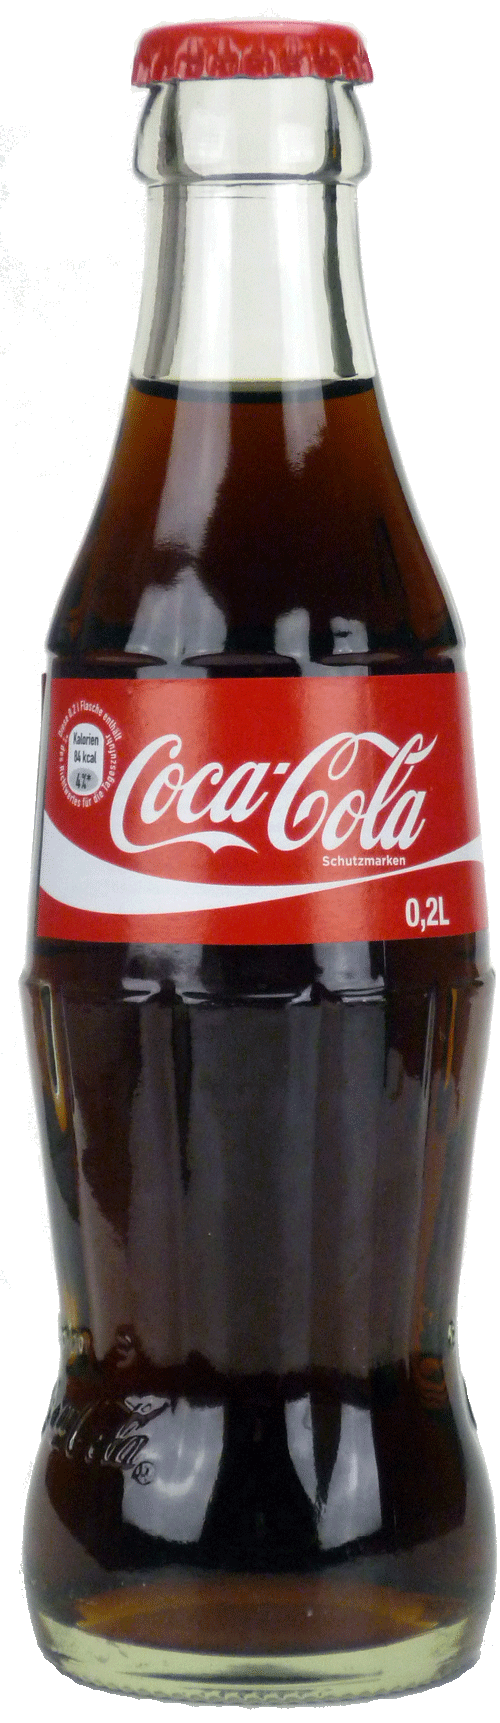 Coca cola bottle png. Image download free